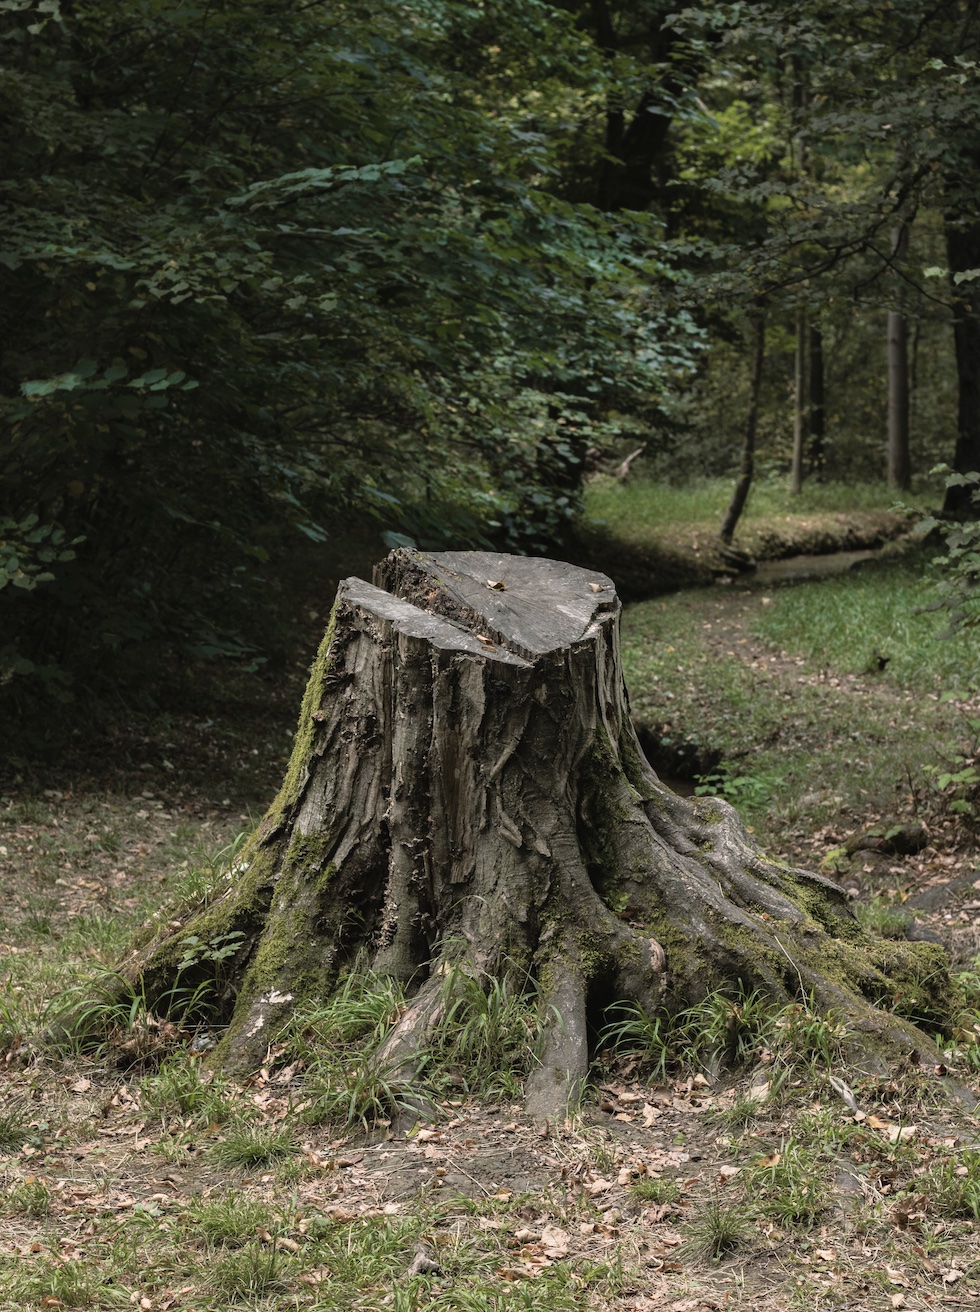 Tree stump; image by Edward Howell, via Unsplash.com.